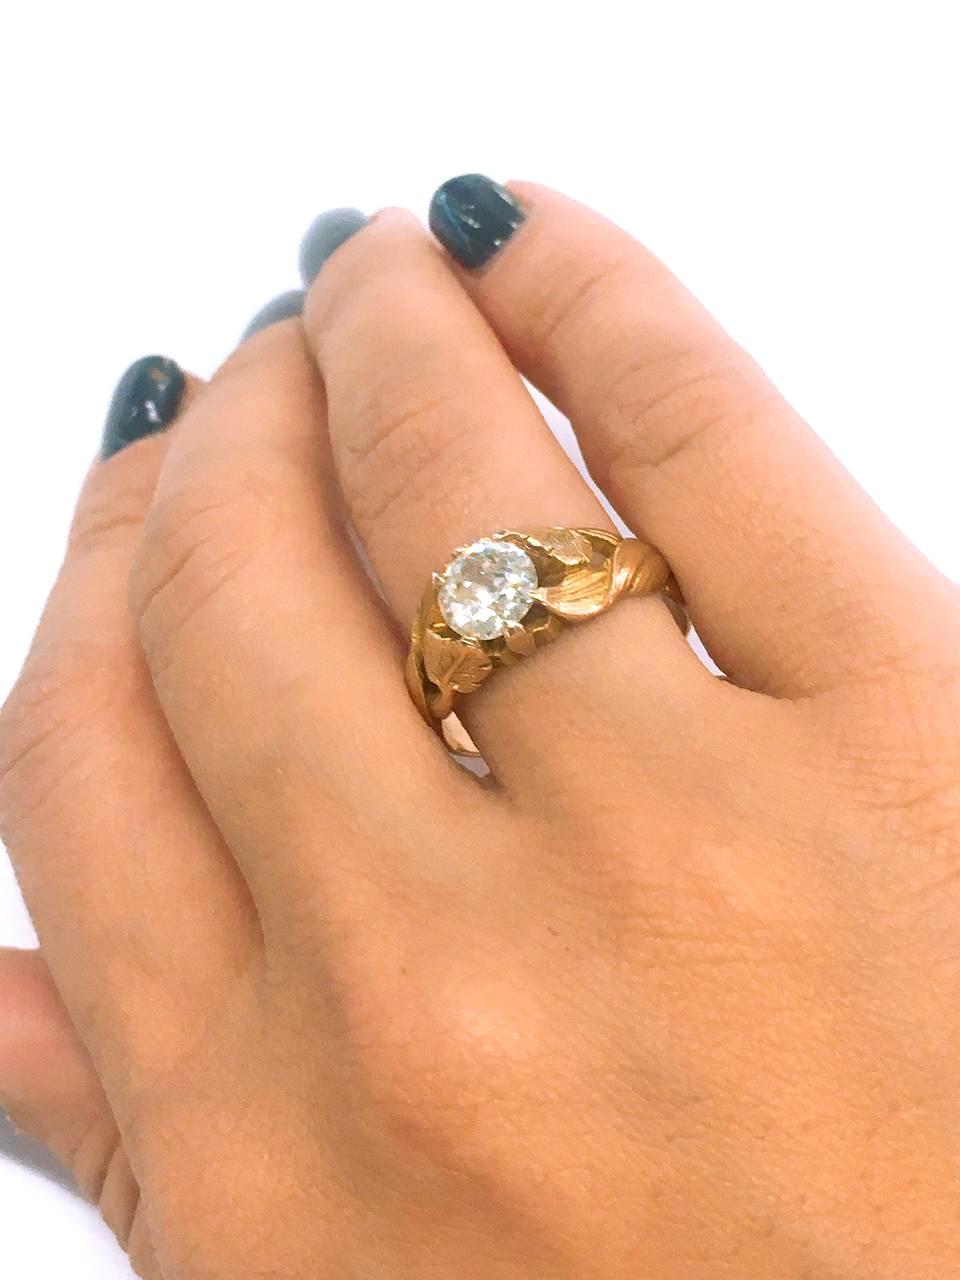 19th Century Russian Diamond Ring | Sandler's Diamonds & Time | Columbia SC  | Mt. Pleasant